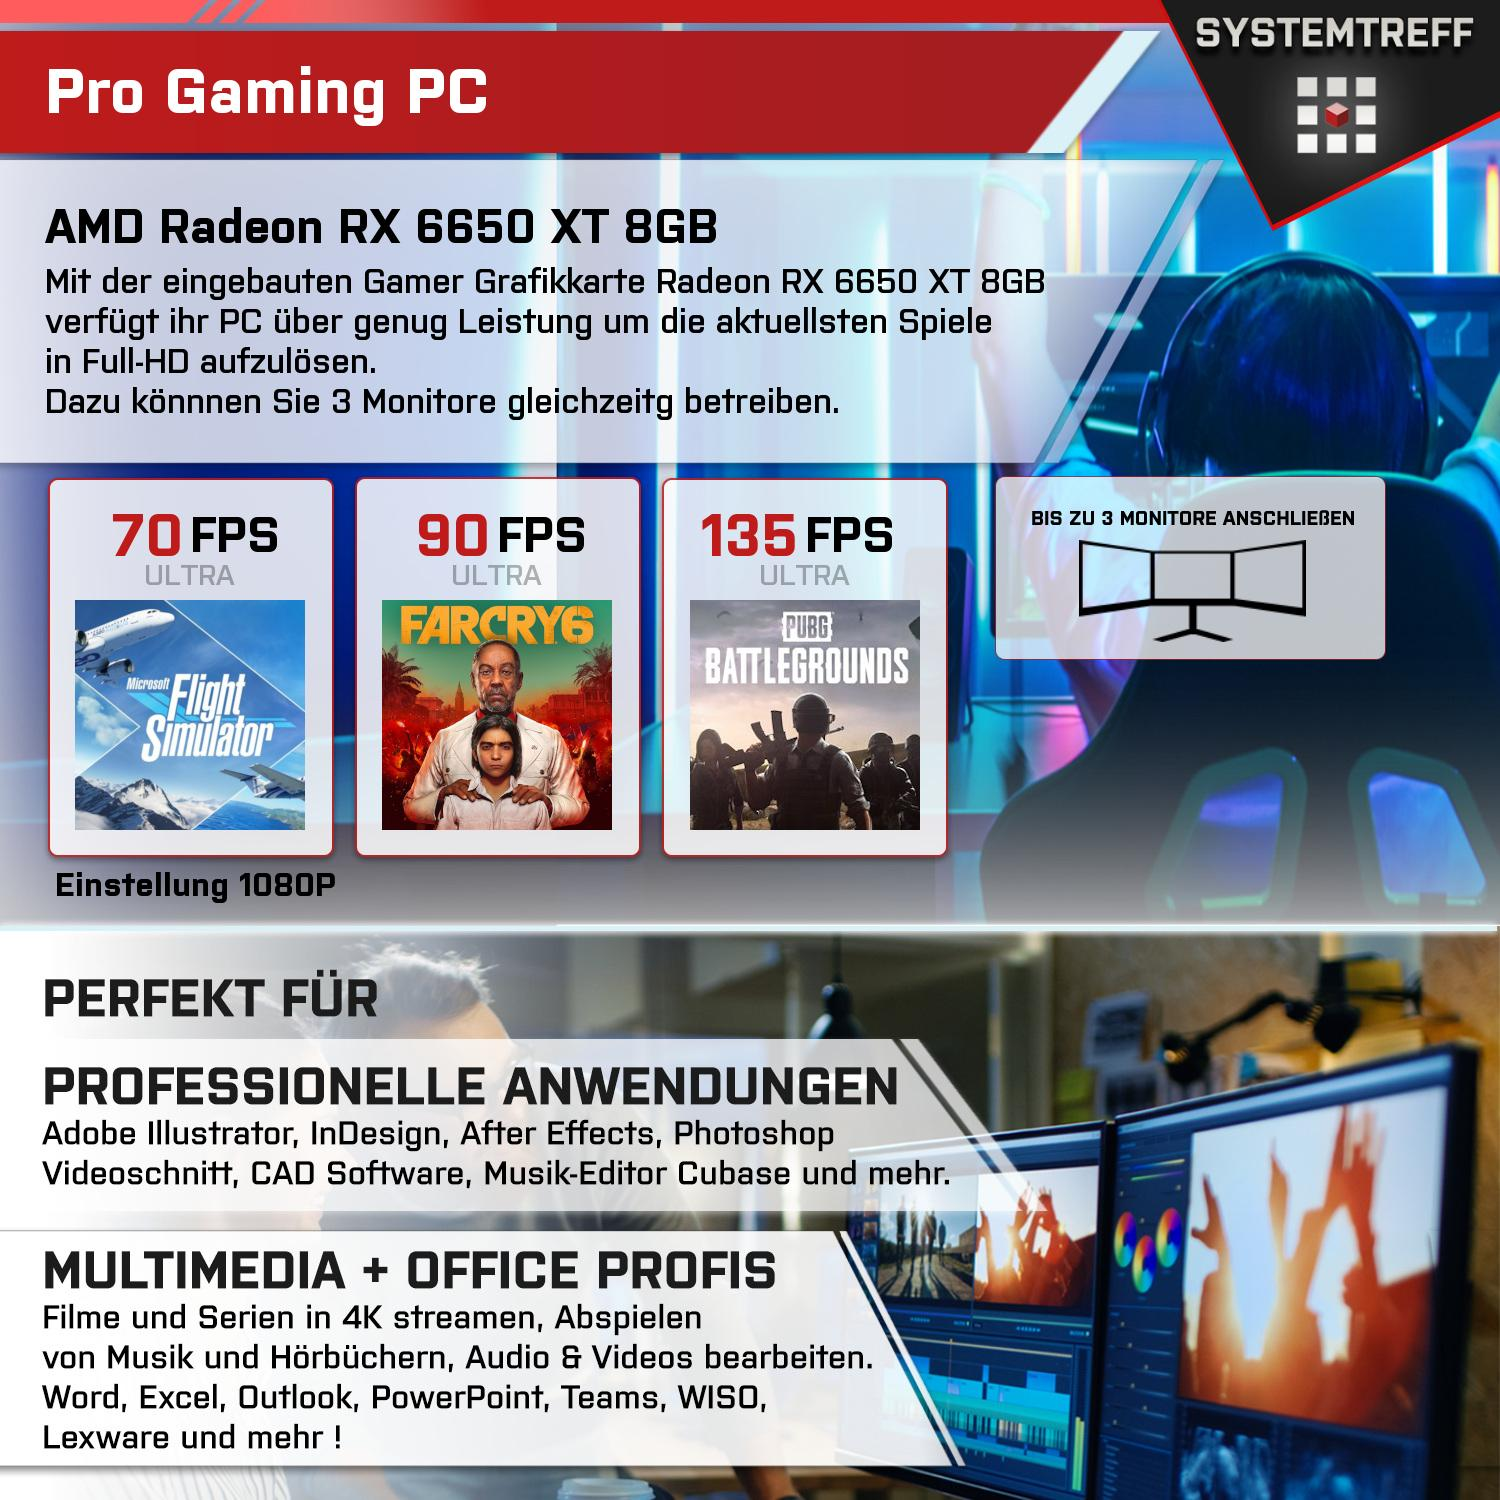 SYSTEMTREFF Pro Gaming AMD Ryzen Ryzen™ Windows RX AMD XT 7 GB Prozessor, 6650 GB AMD RAM, 11 32 Pro, 7 1000 Gaming Radeon™ mSSD, mit PC 5800X3D